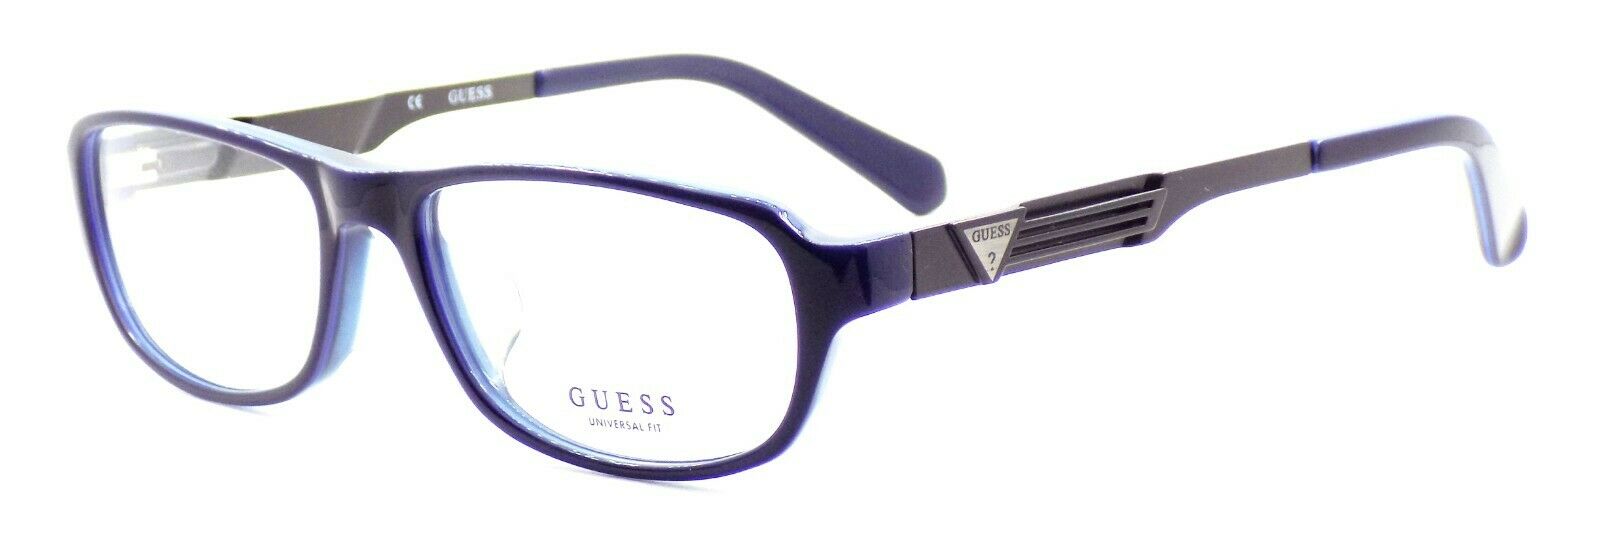 1-GUESS GUA1779 BL Men's ASIAN Fit Eyeglasses Frames 55-17-145 Blue + CASE-715583723801-IKSpecs